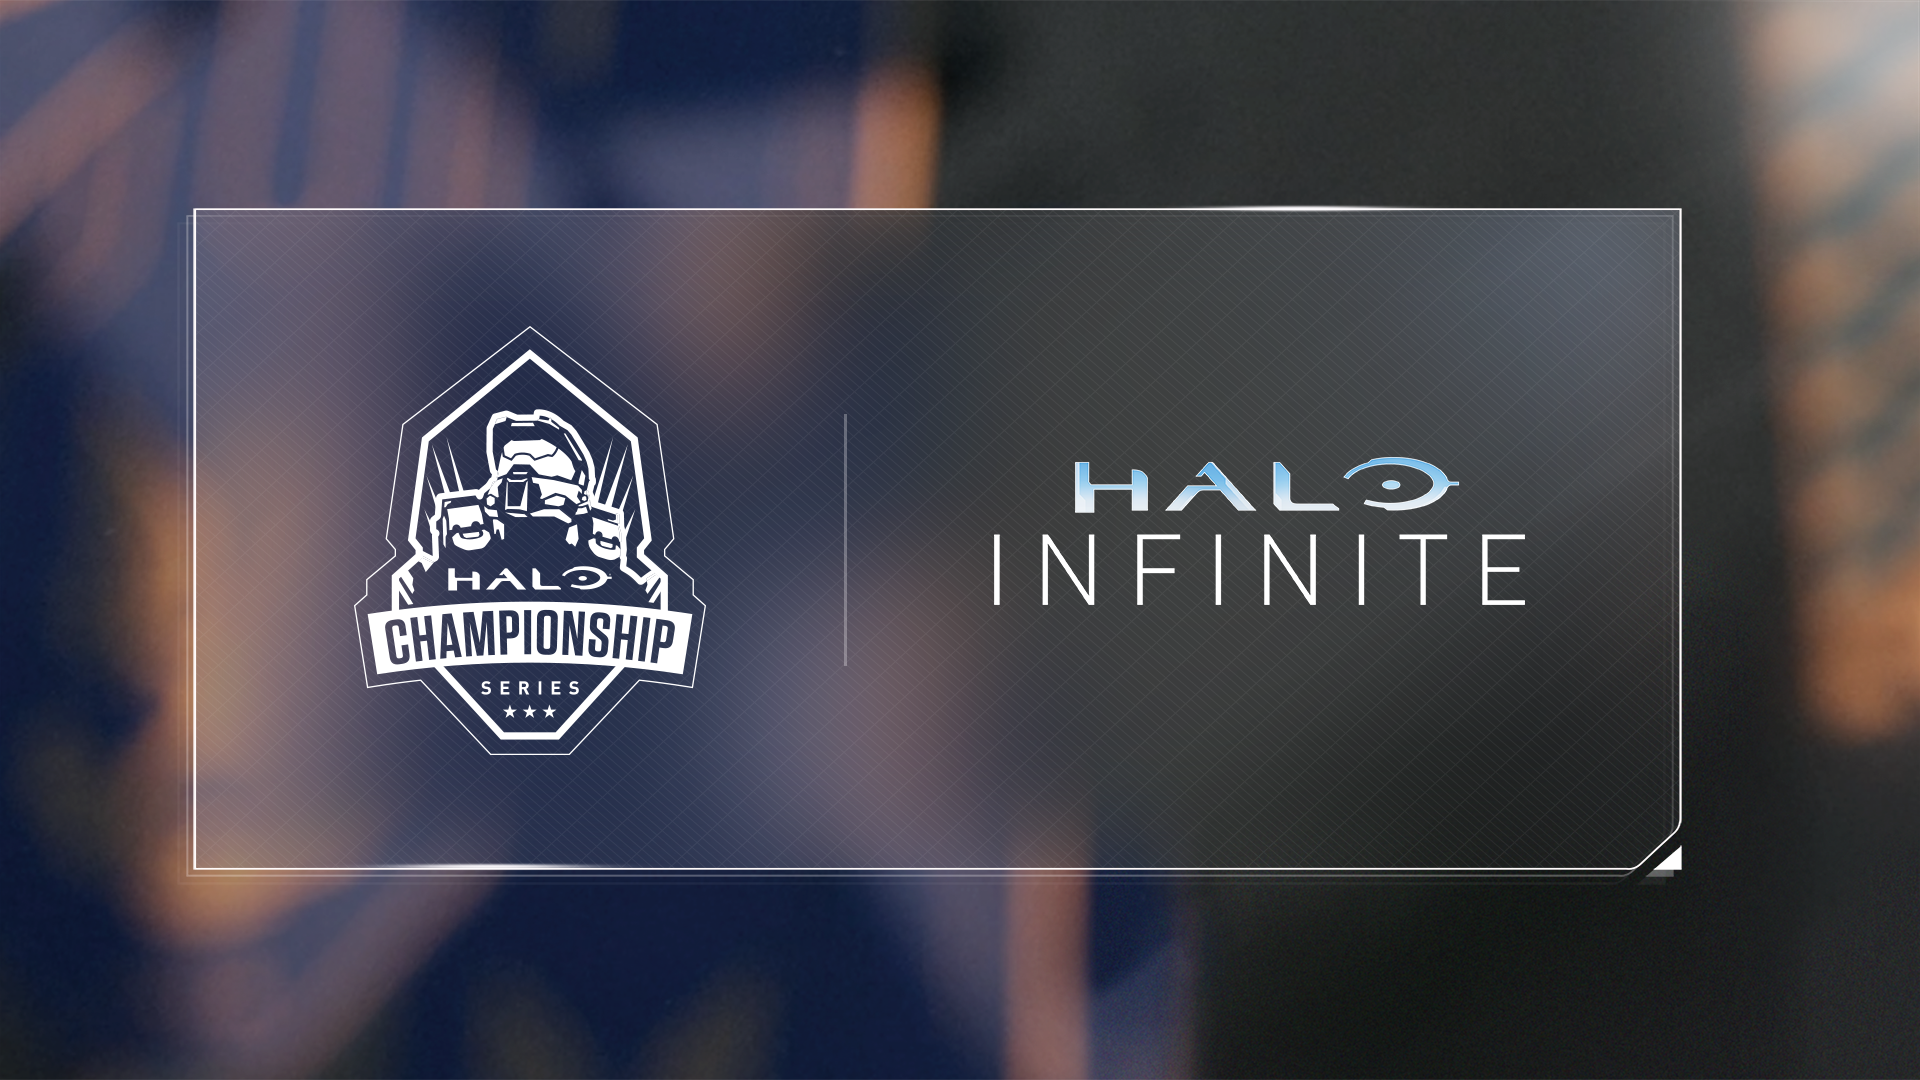 H C S logo with Halo Infinite